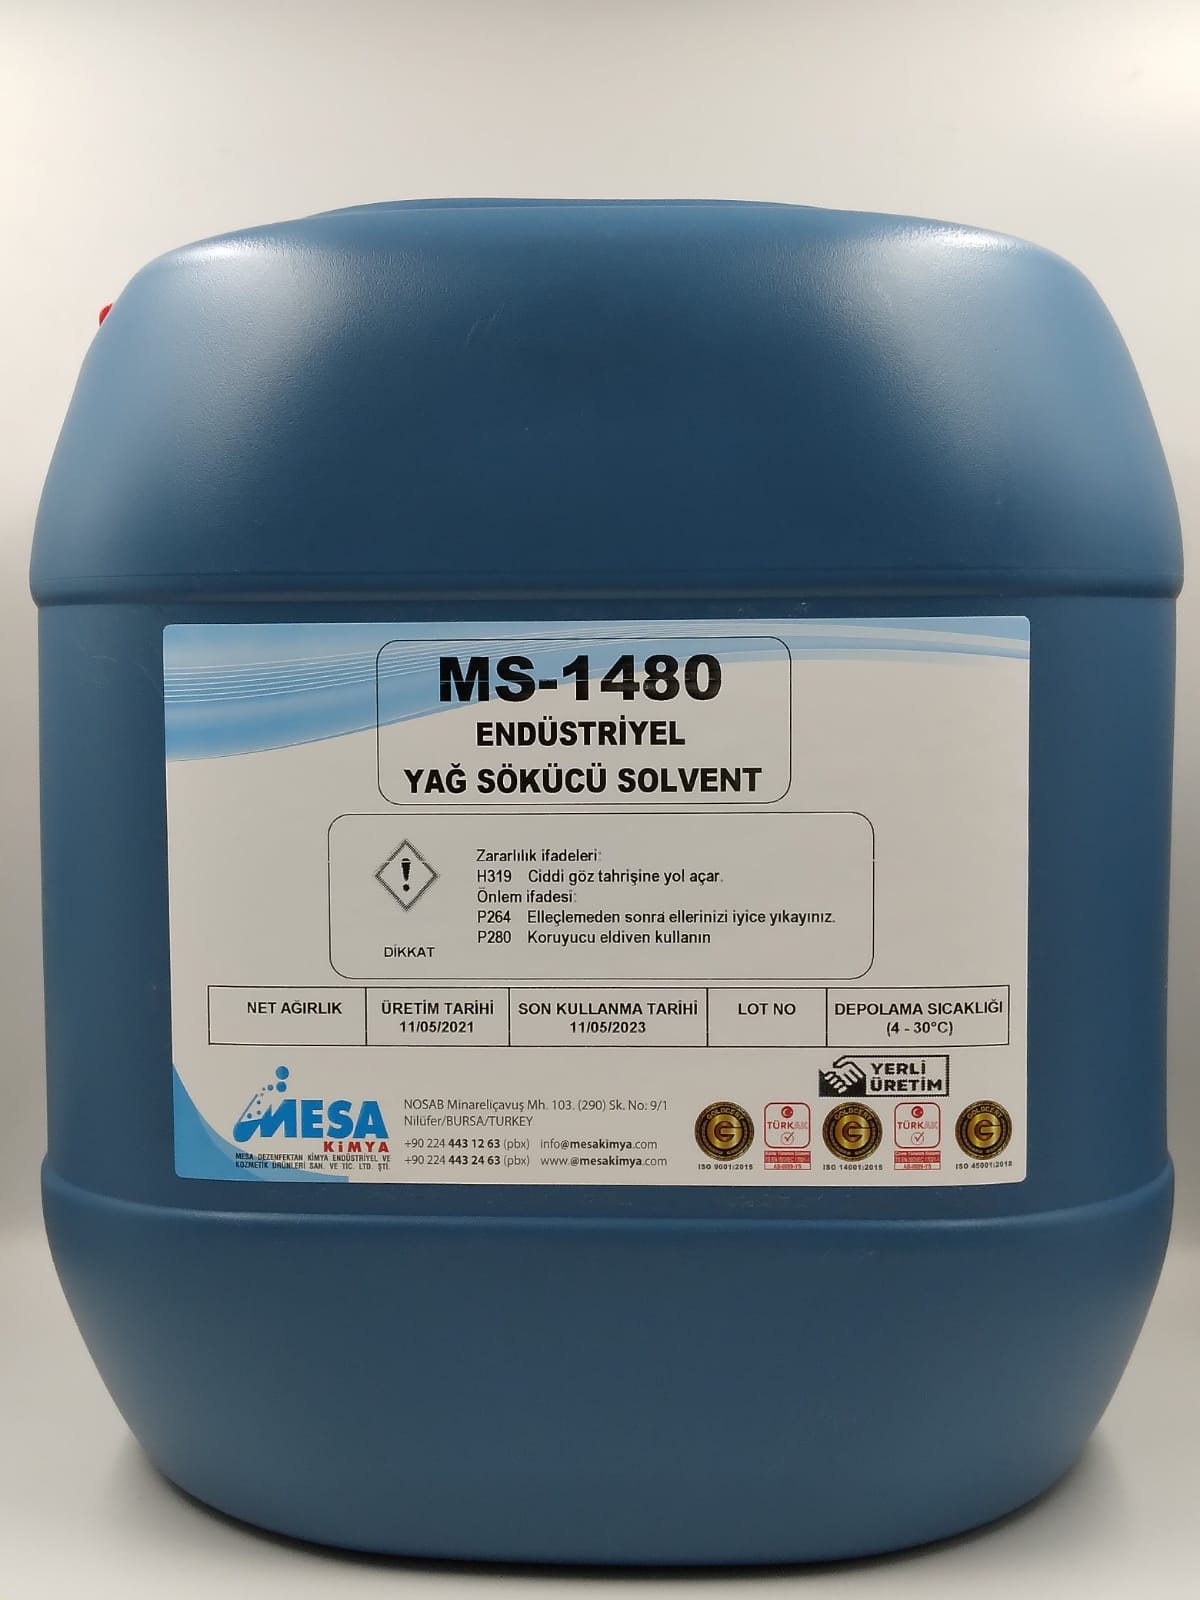 Endüstriyel yağ çözücü solvent MS-1480 35 kg